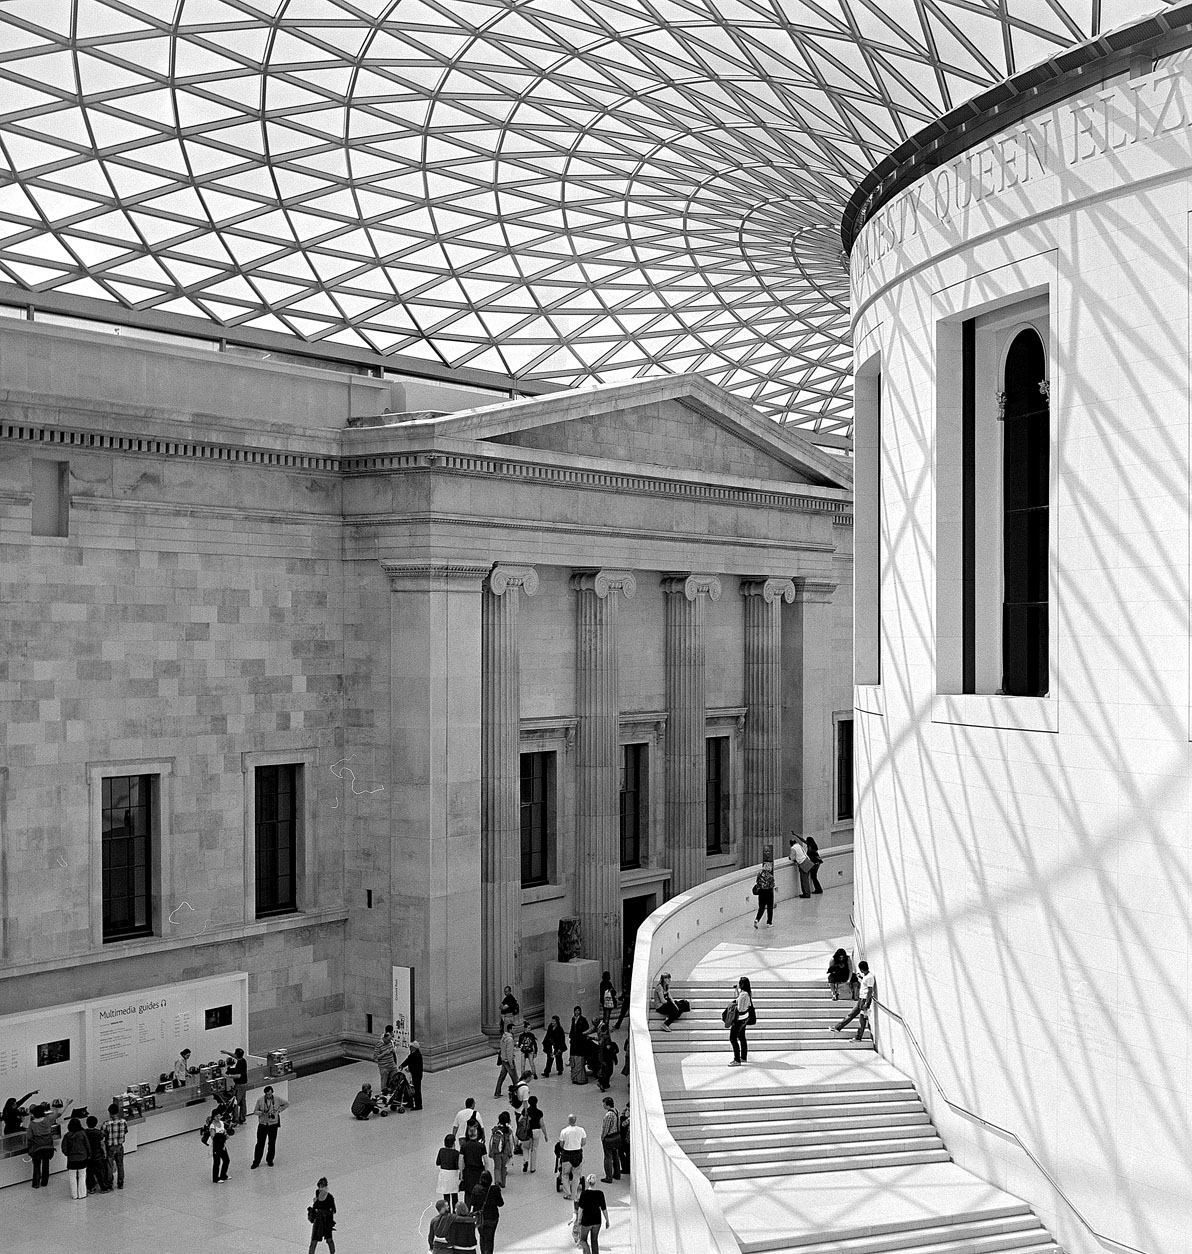 fotka / image British Museum, Summer in London